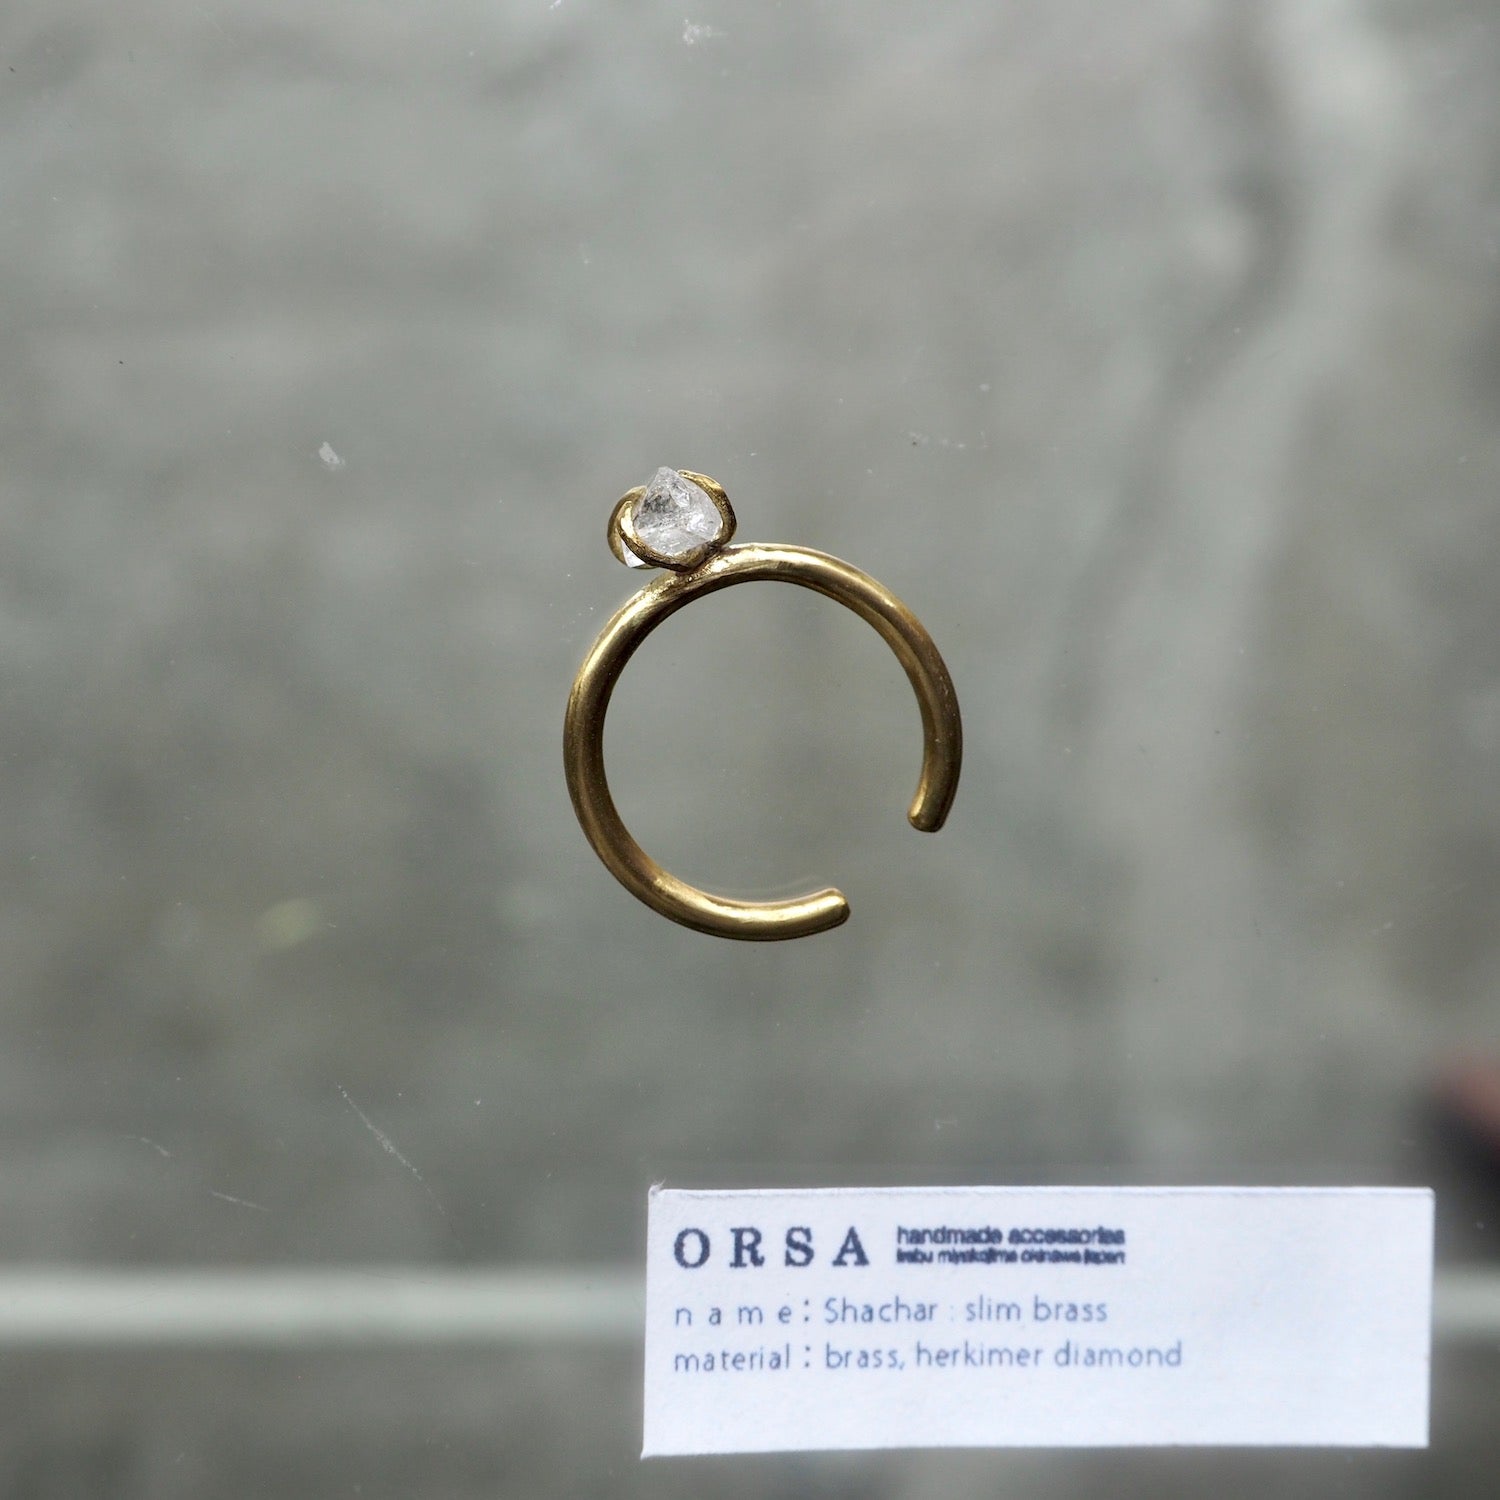 ORSA/Shachar:slim brass(herkimer diamond)